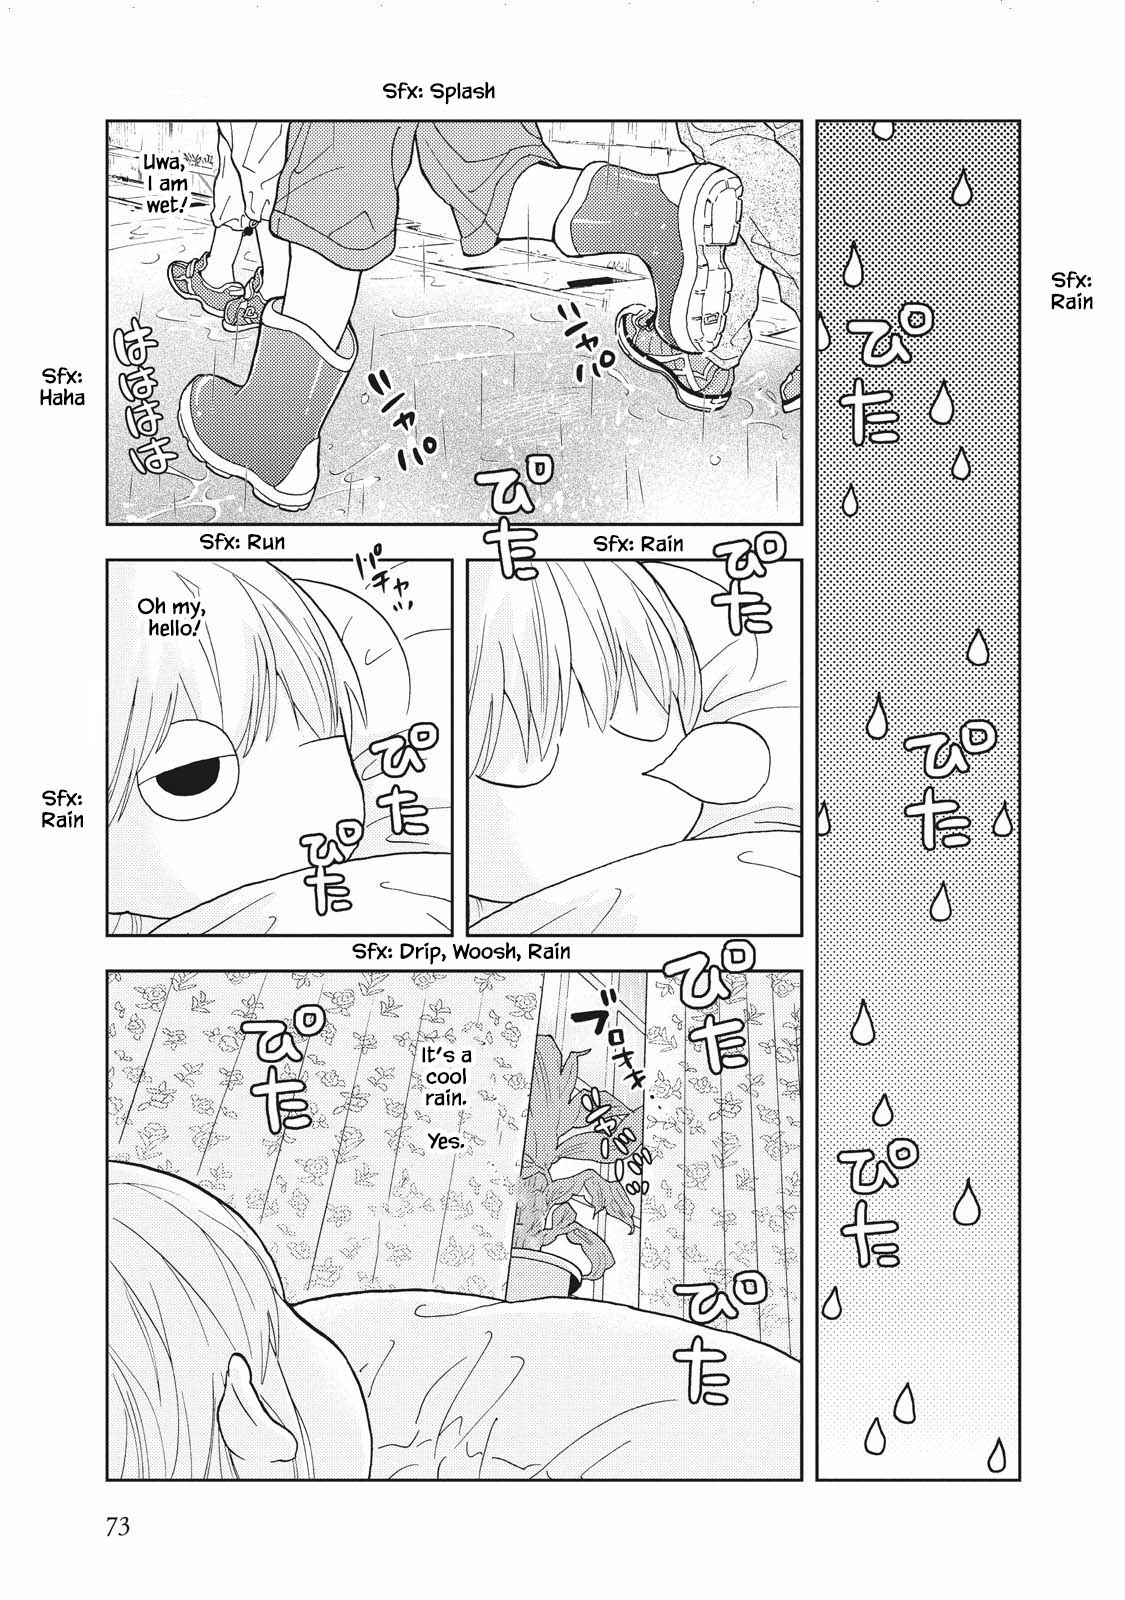 Takako-San - 7 page 1-c86f22e0